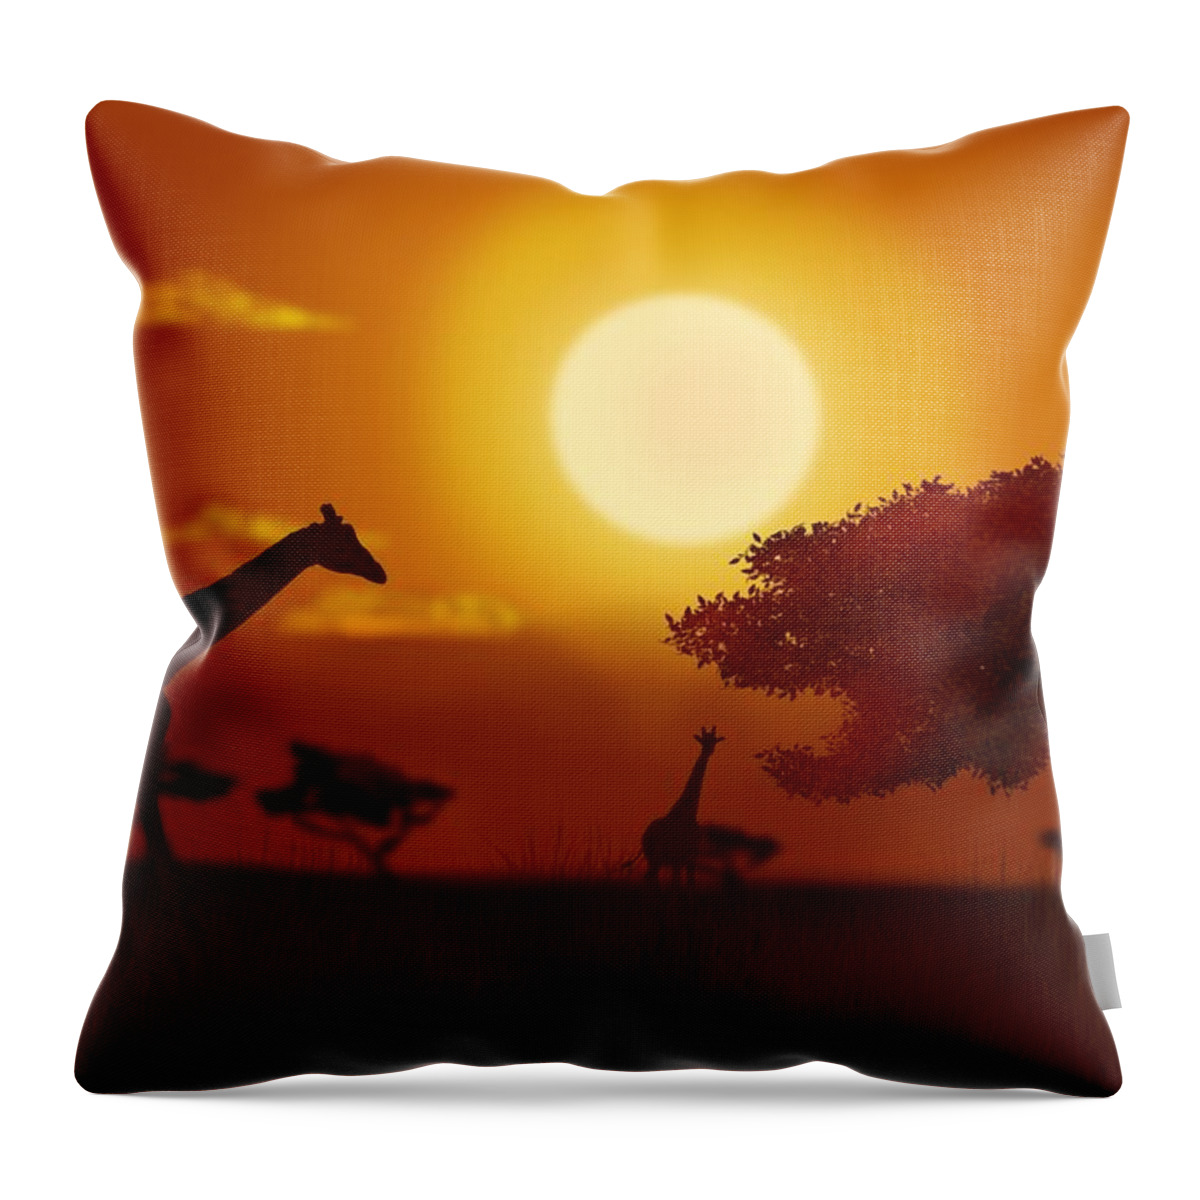 Sunset Throw Pillow featuring the digital art African Sunset I by Eva Sawyer